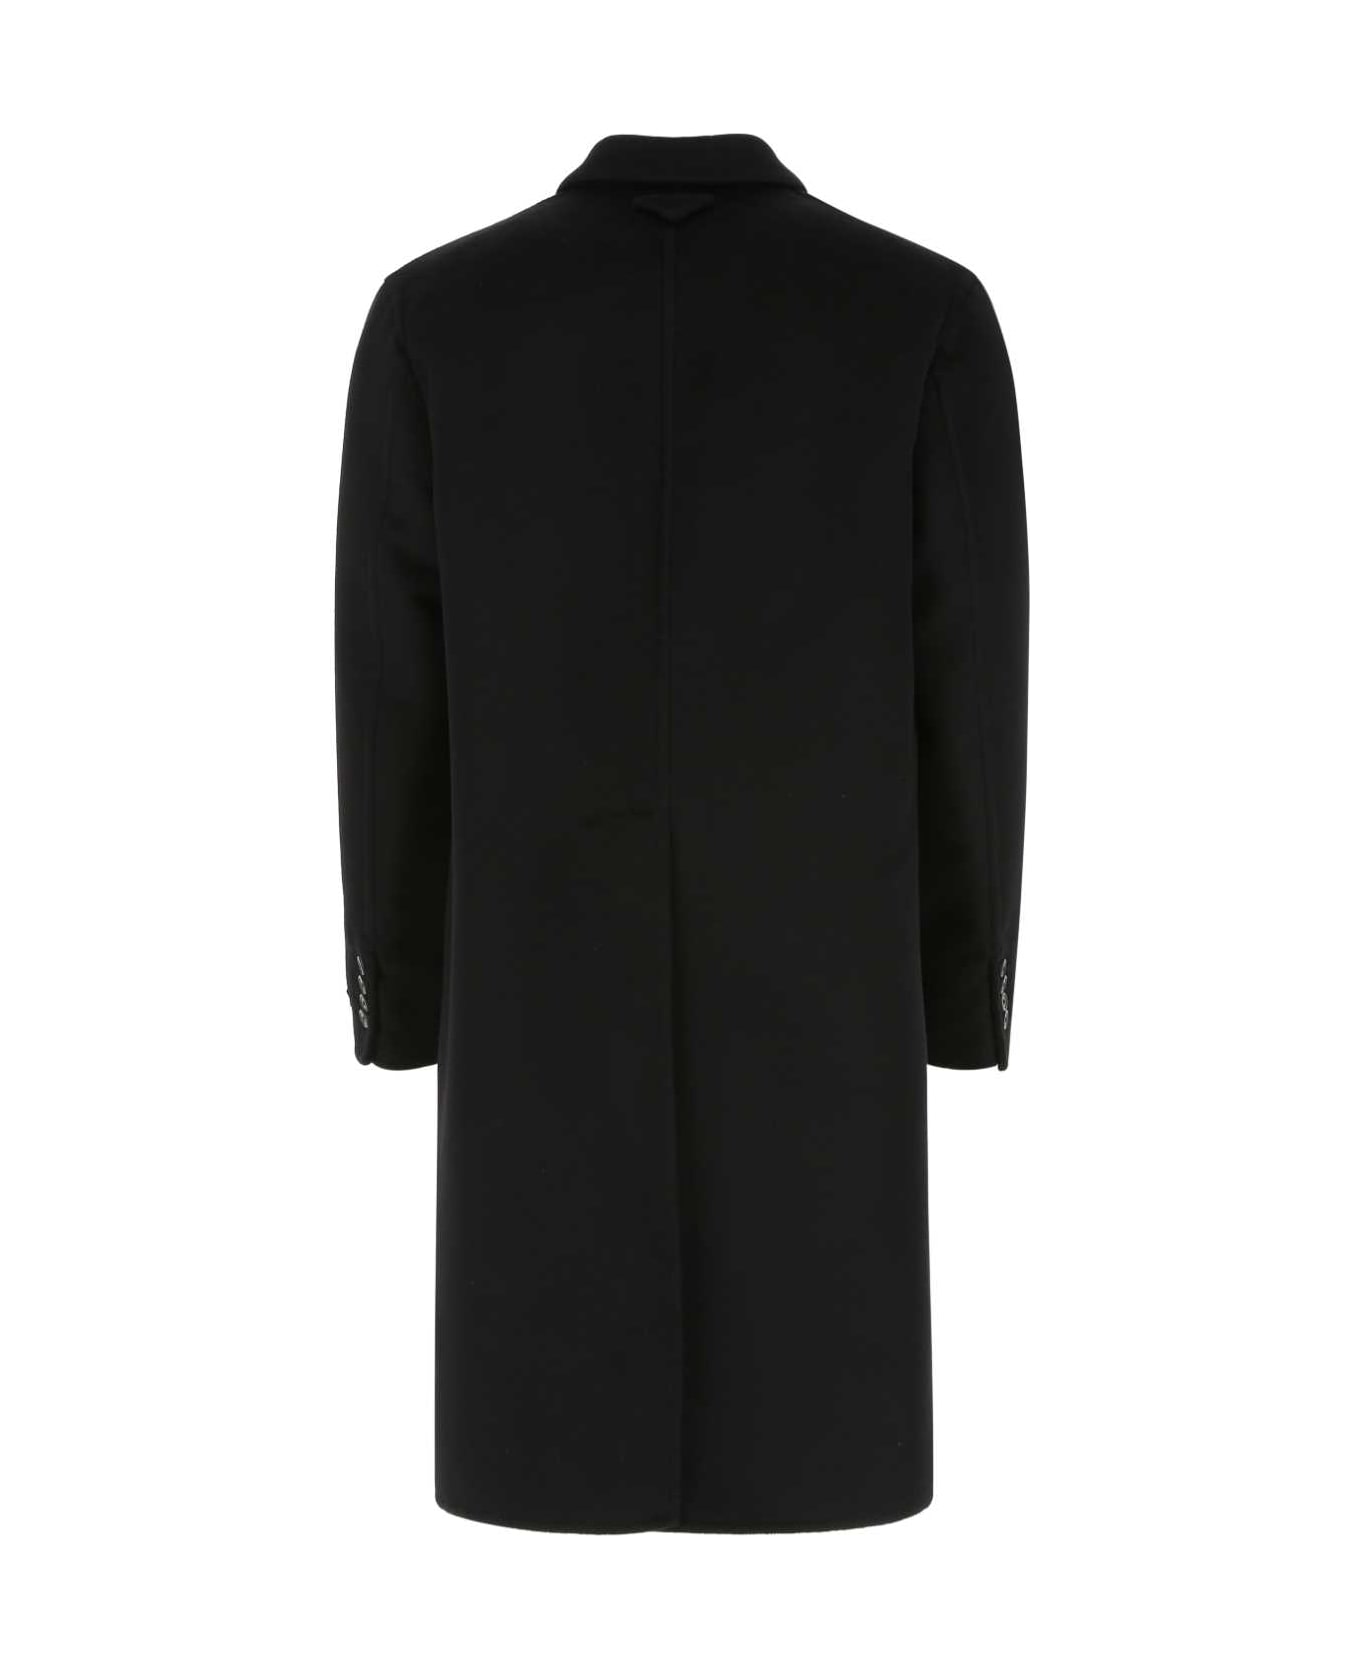 Prada Black Wool Blend Coat - F0002 コート